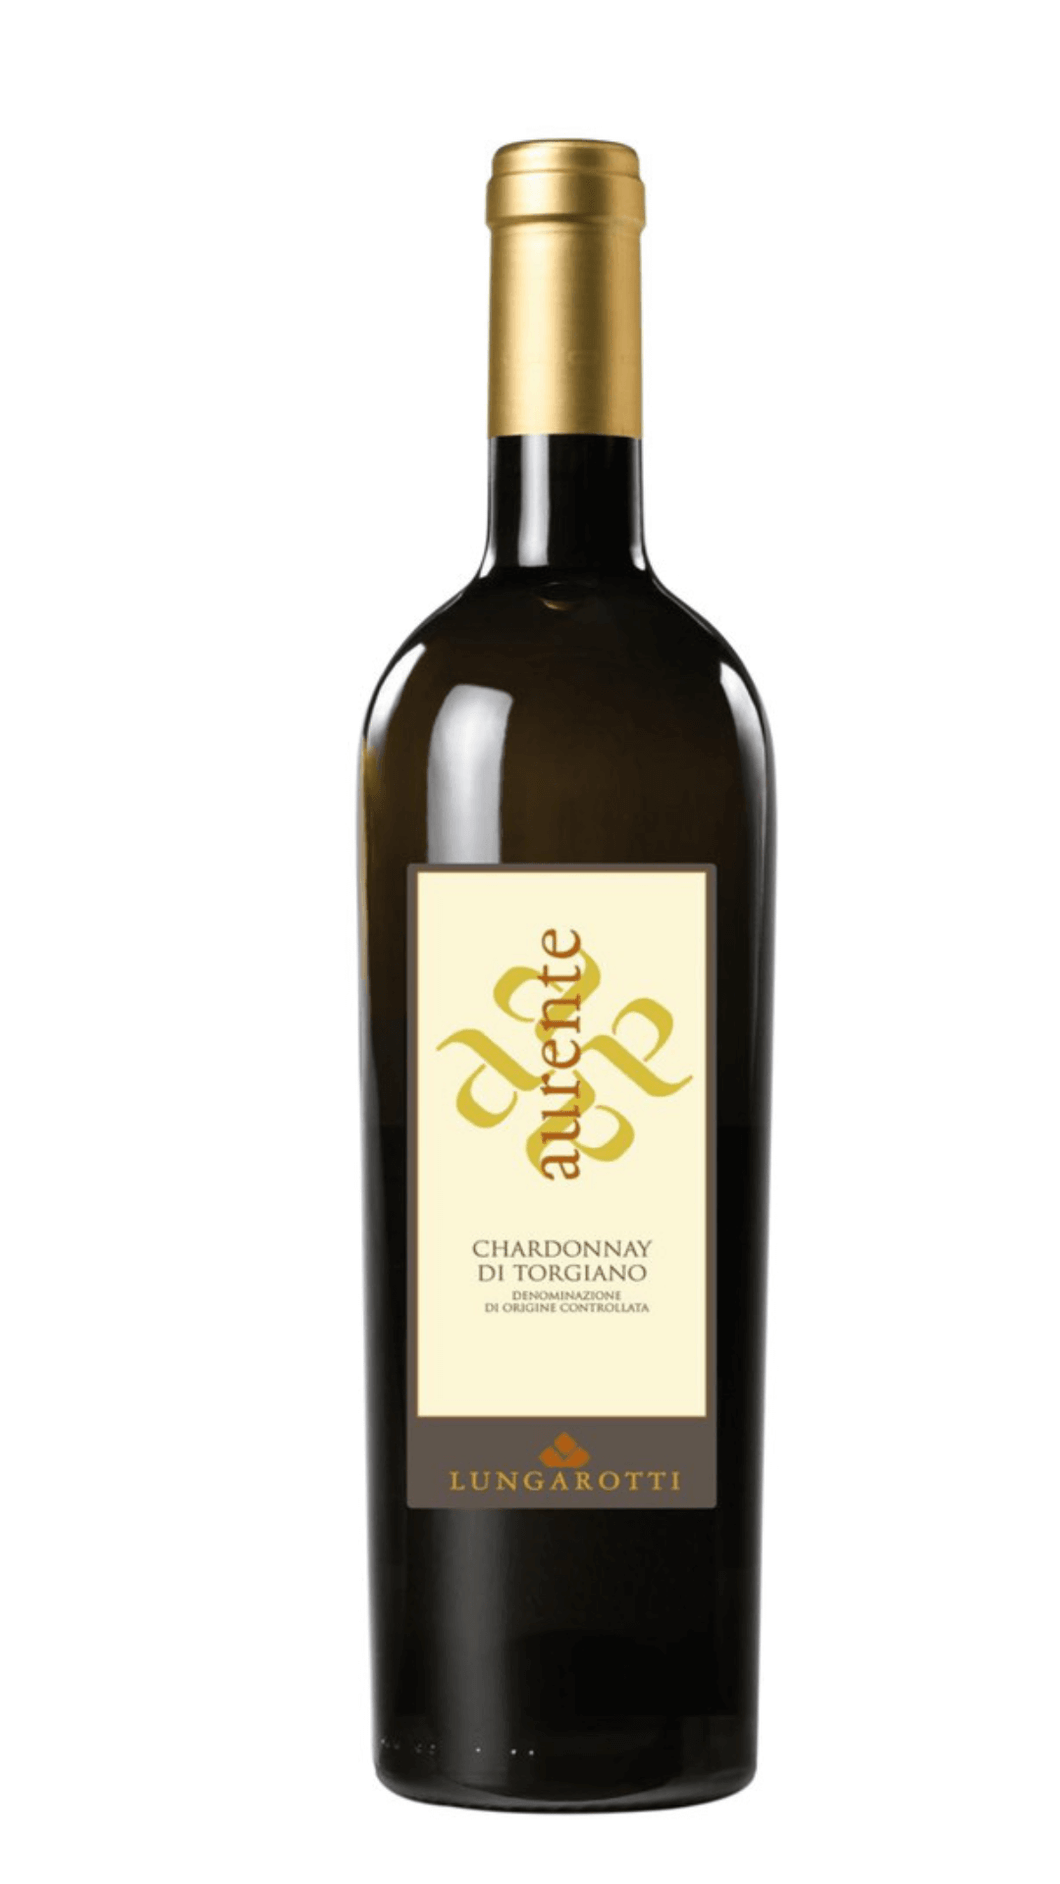 Aurente Chardonnay di Torgiano DOC Lungarotti